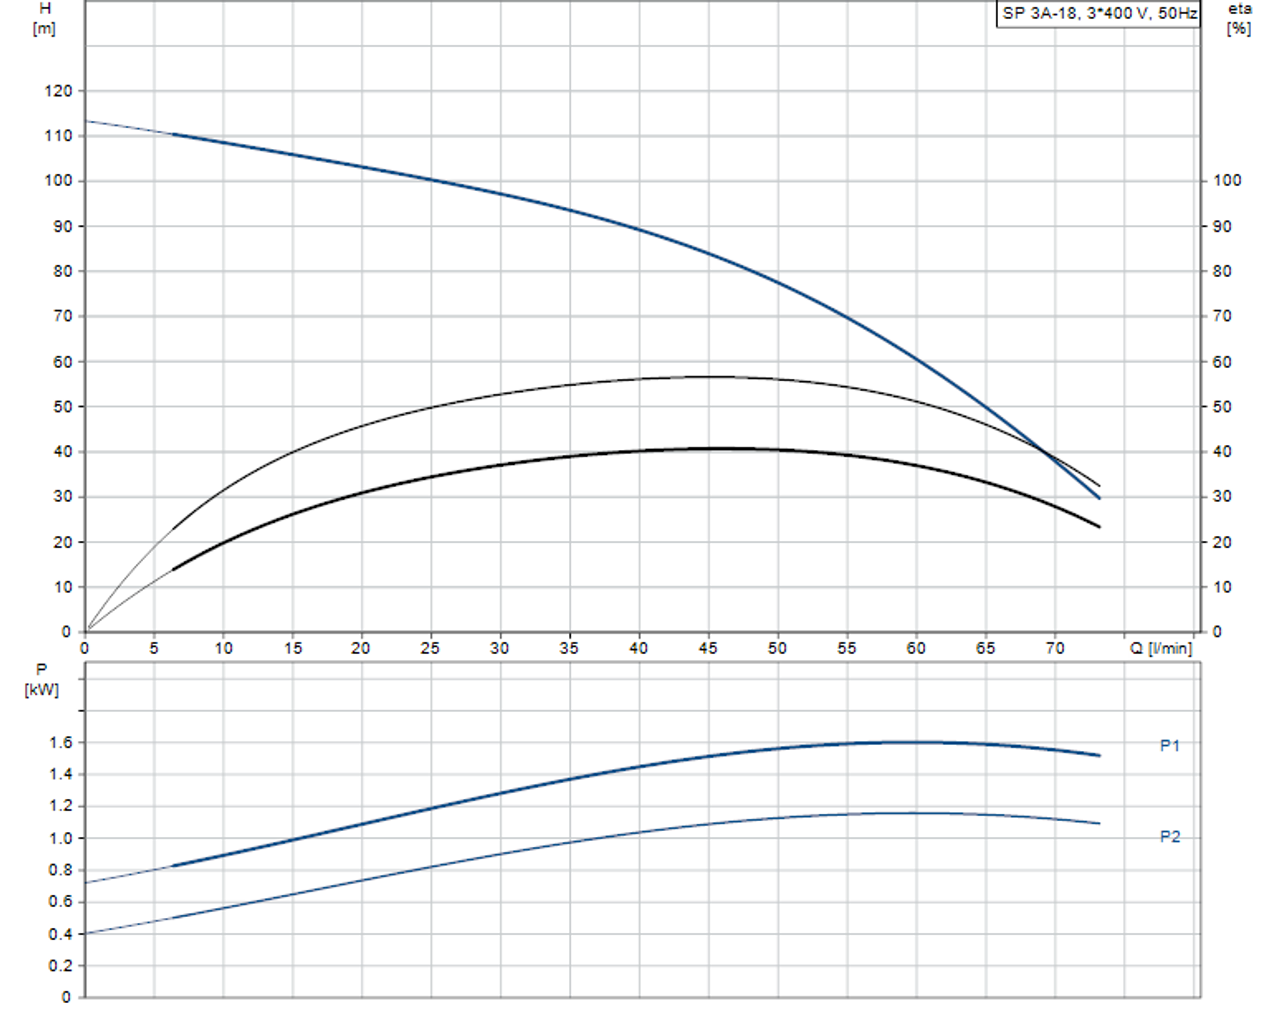 SP 3A-18 415v Performance Curve